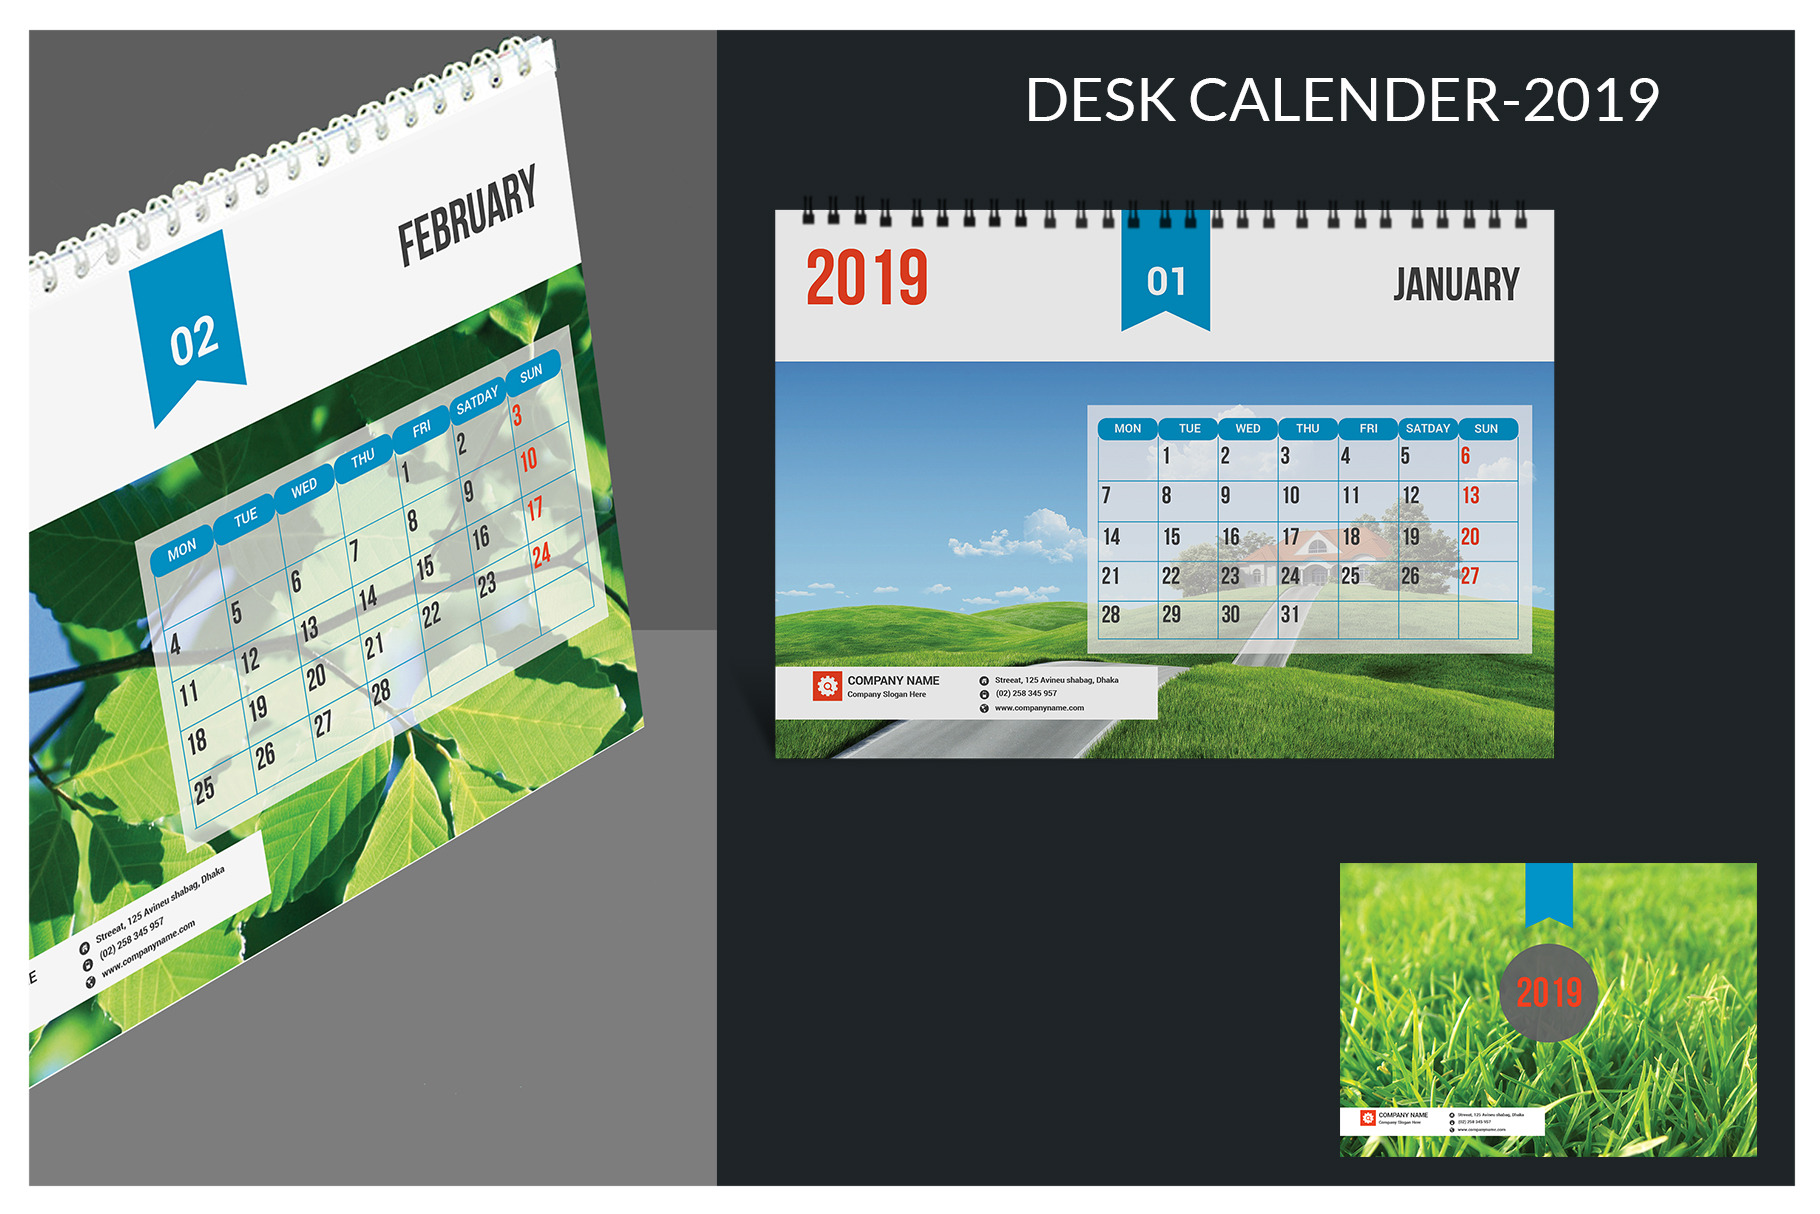 Desk Calendar-2019 - Stationery - 4